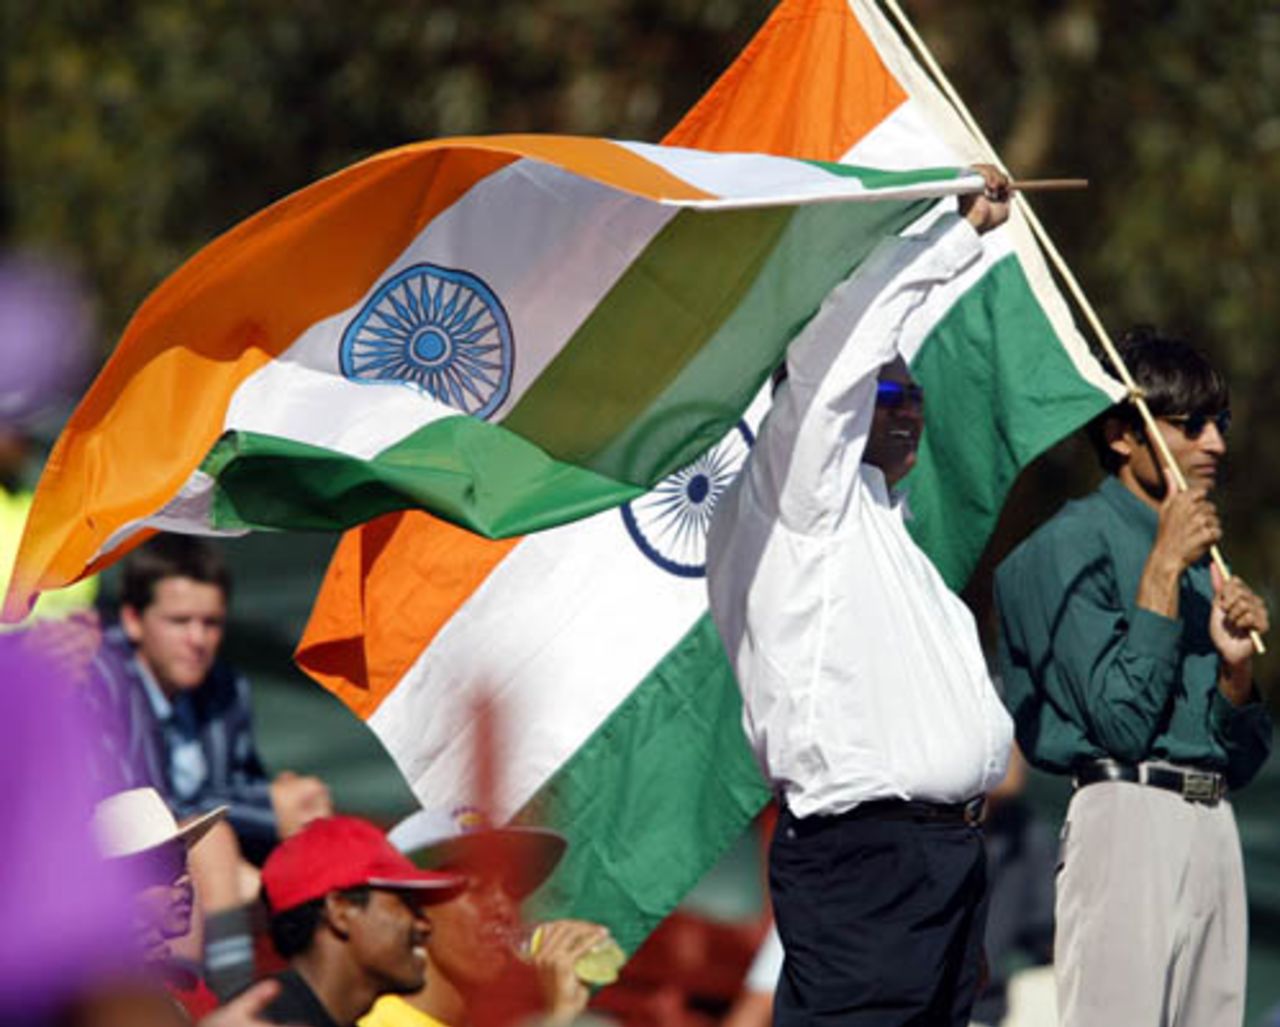 World Cup, 2003 - India v Netherlands at Paarl, 12 Feb 2003